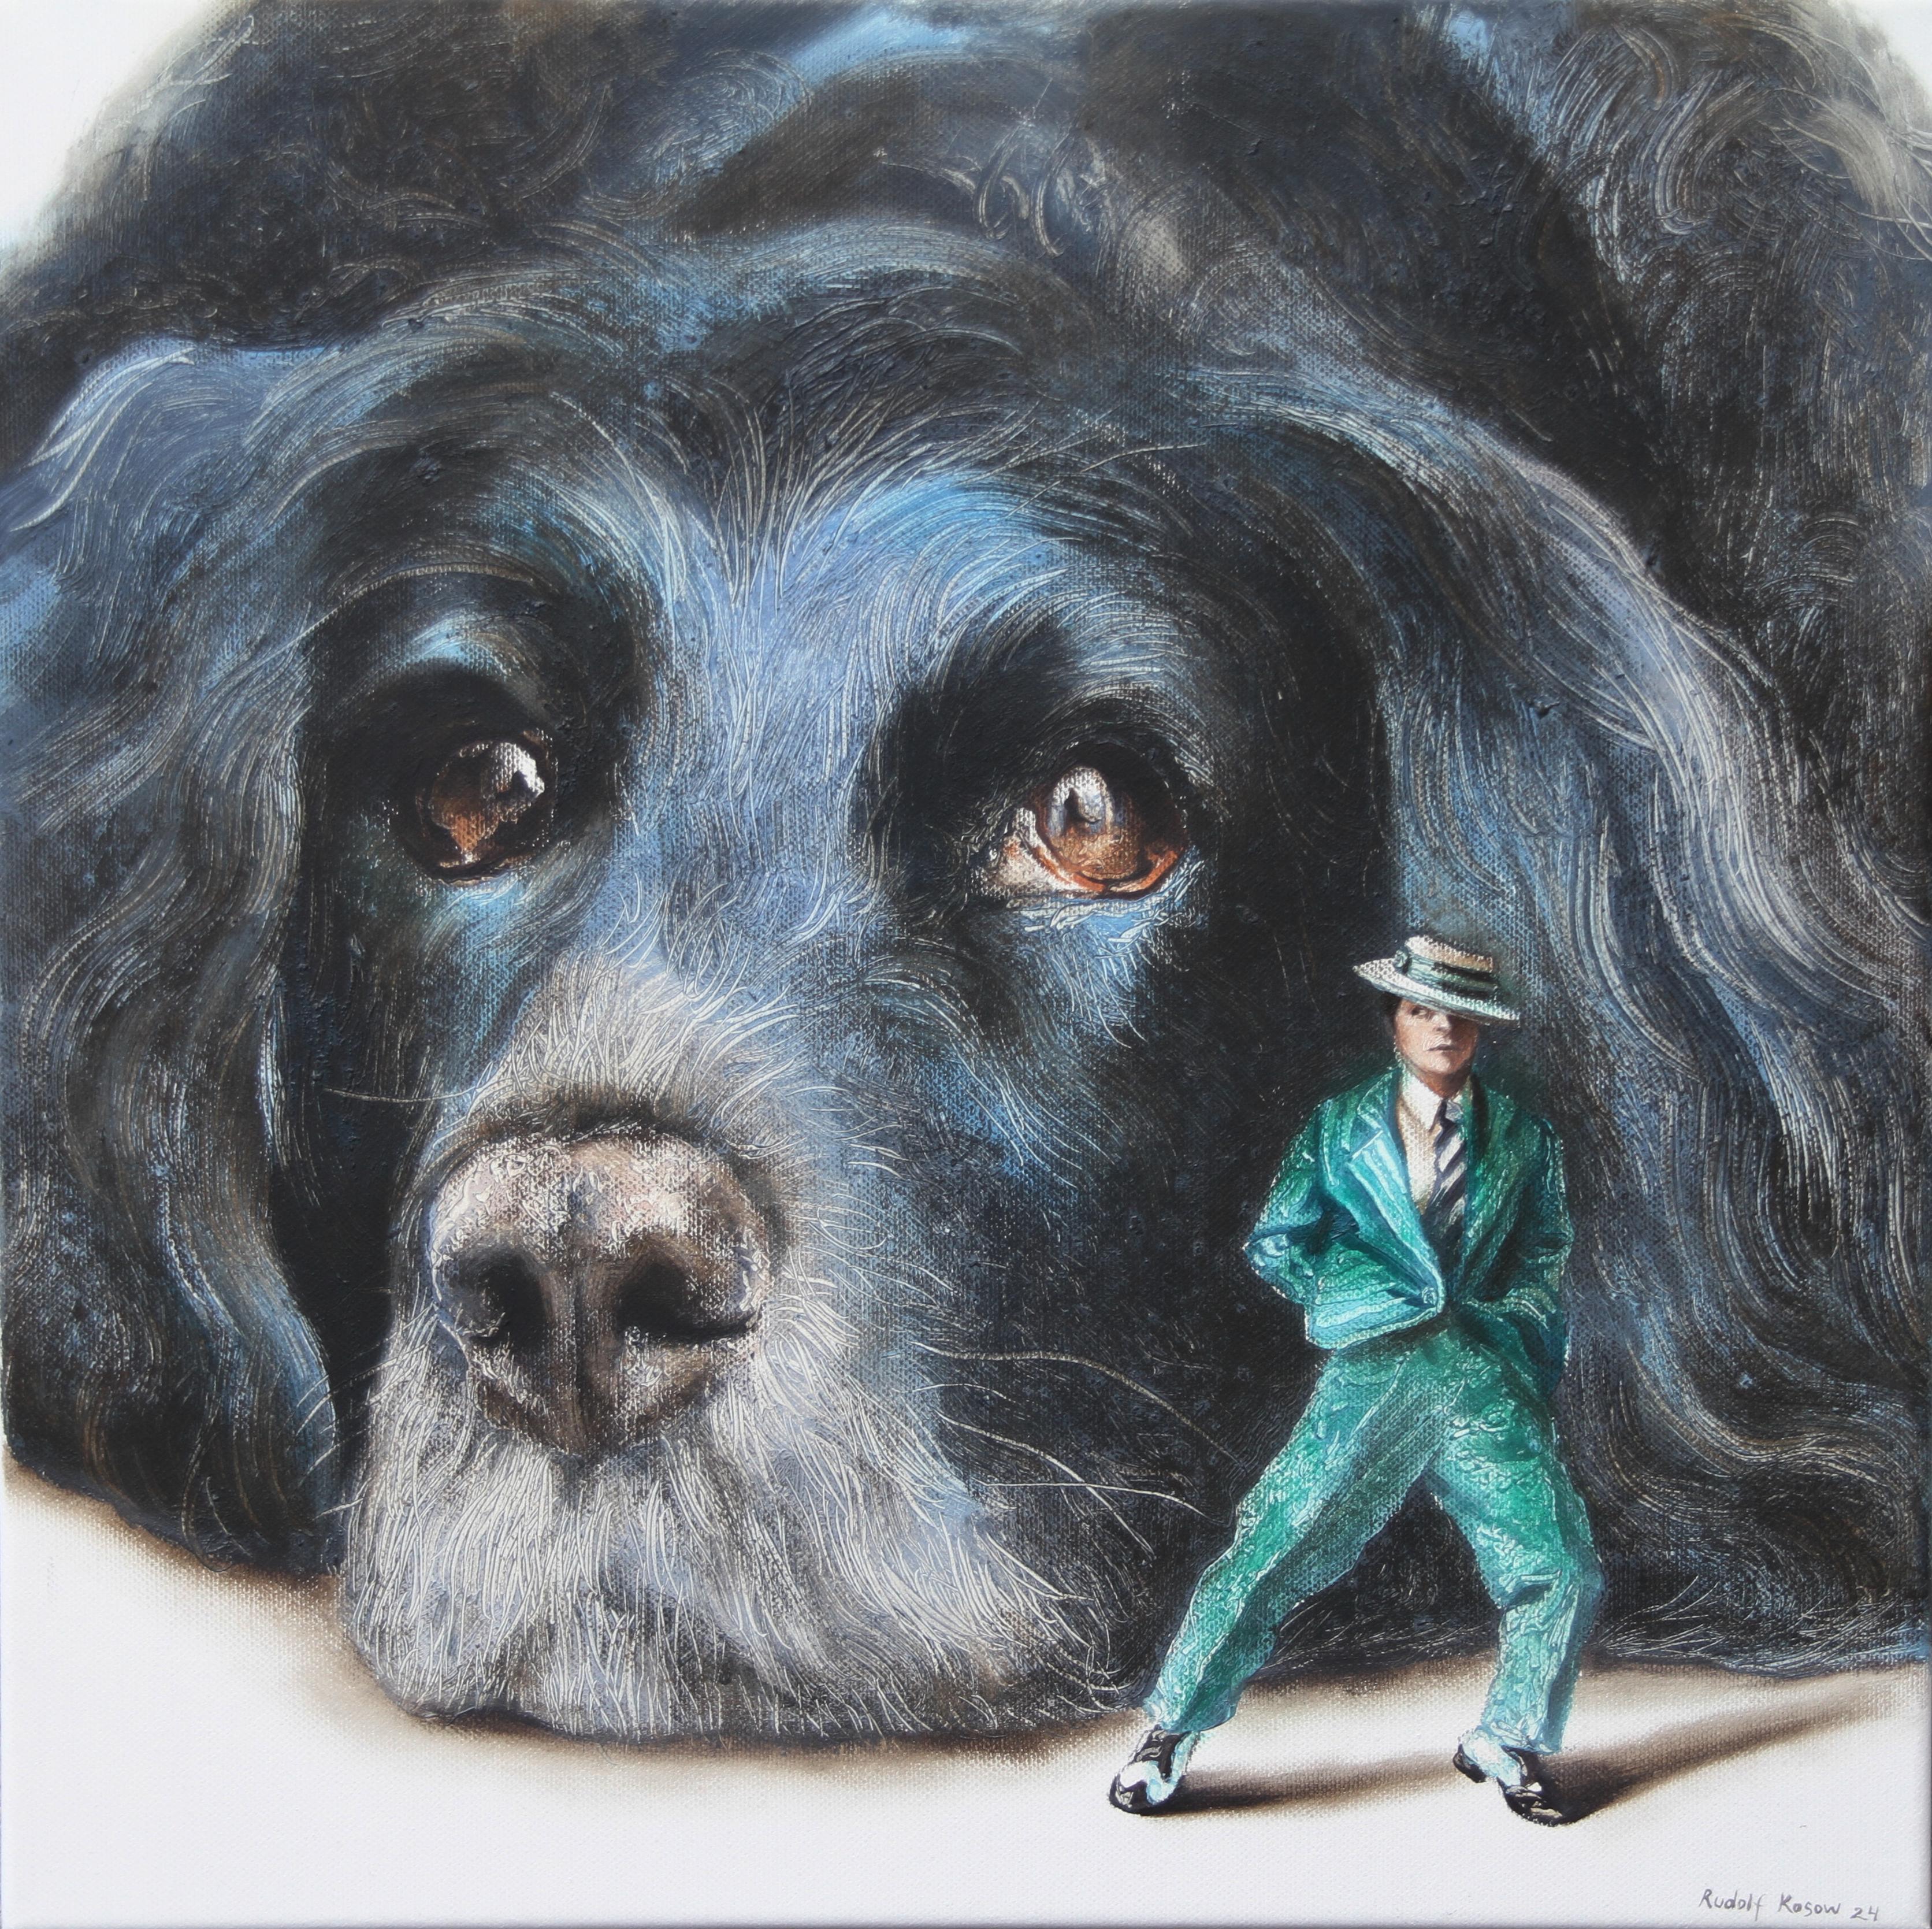 Moody (black dog, hat man, green vintage suit, animal, surrealist oil painting) - Painting by Rudolf Kosow